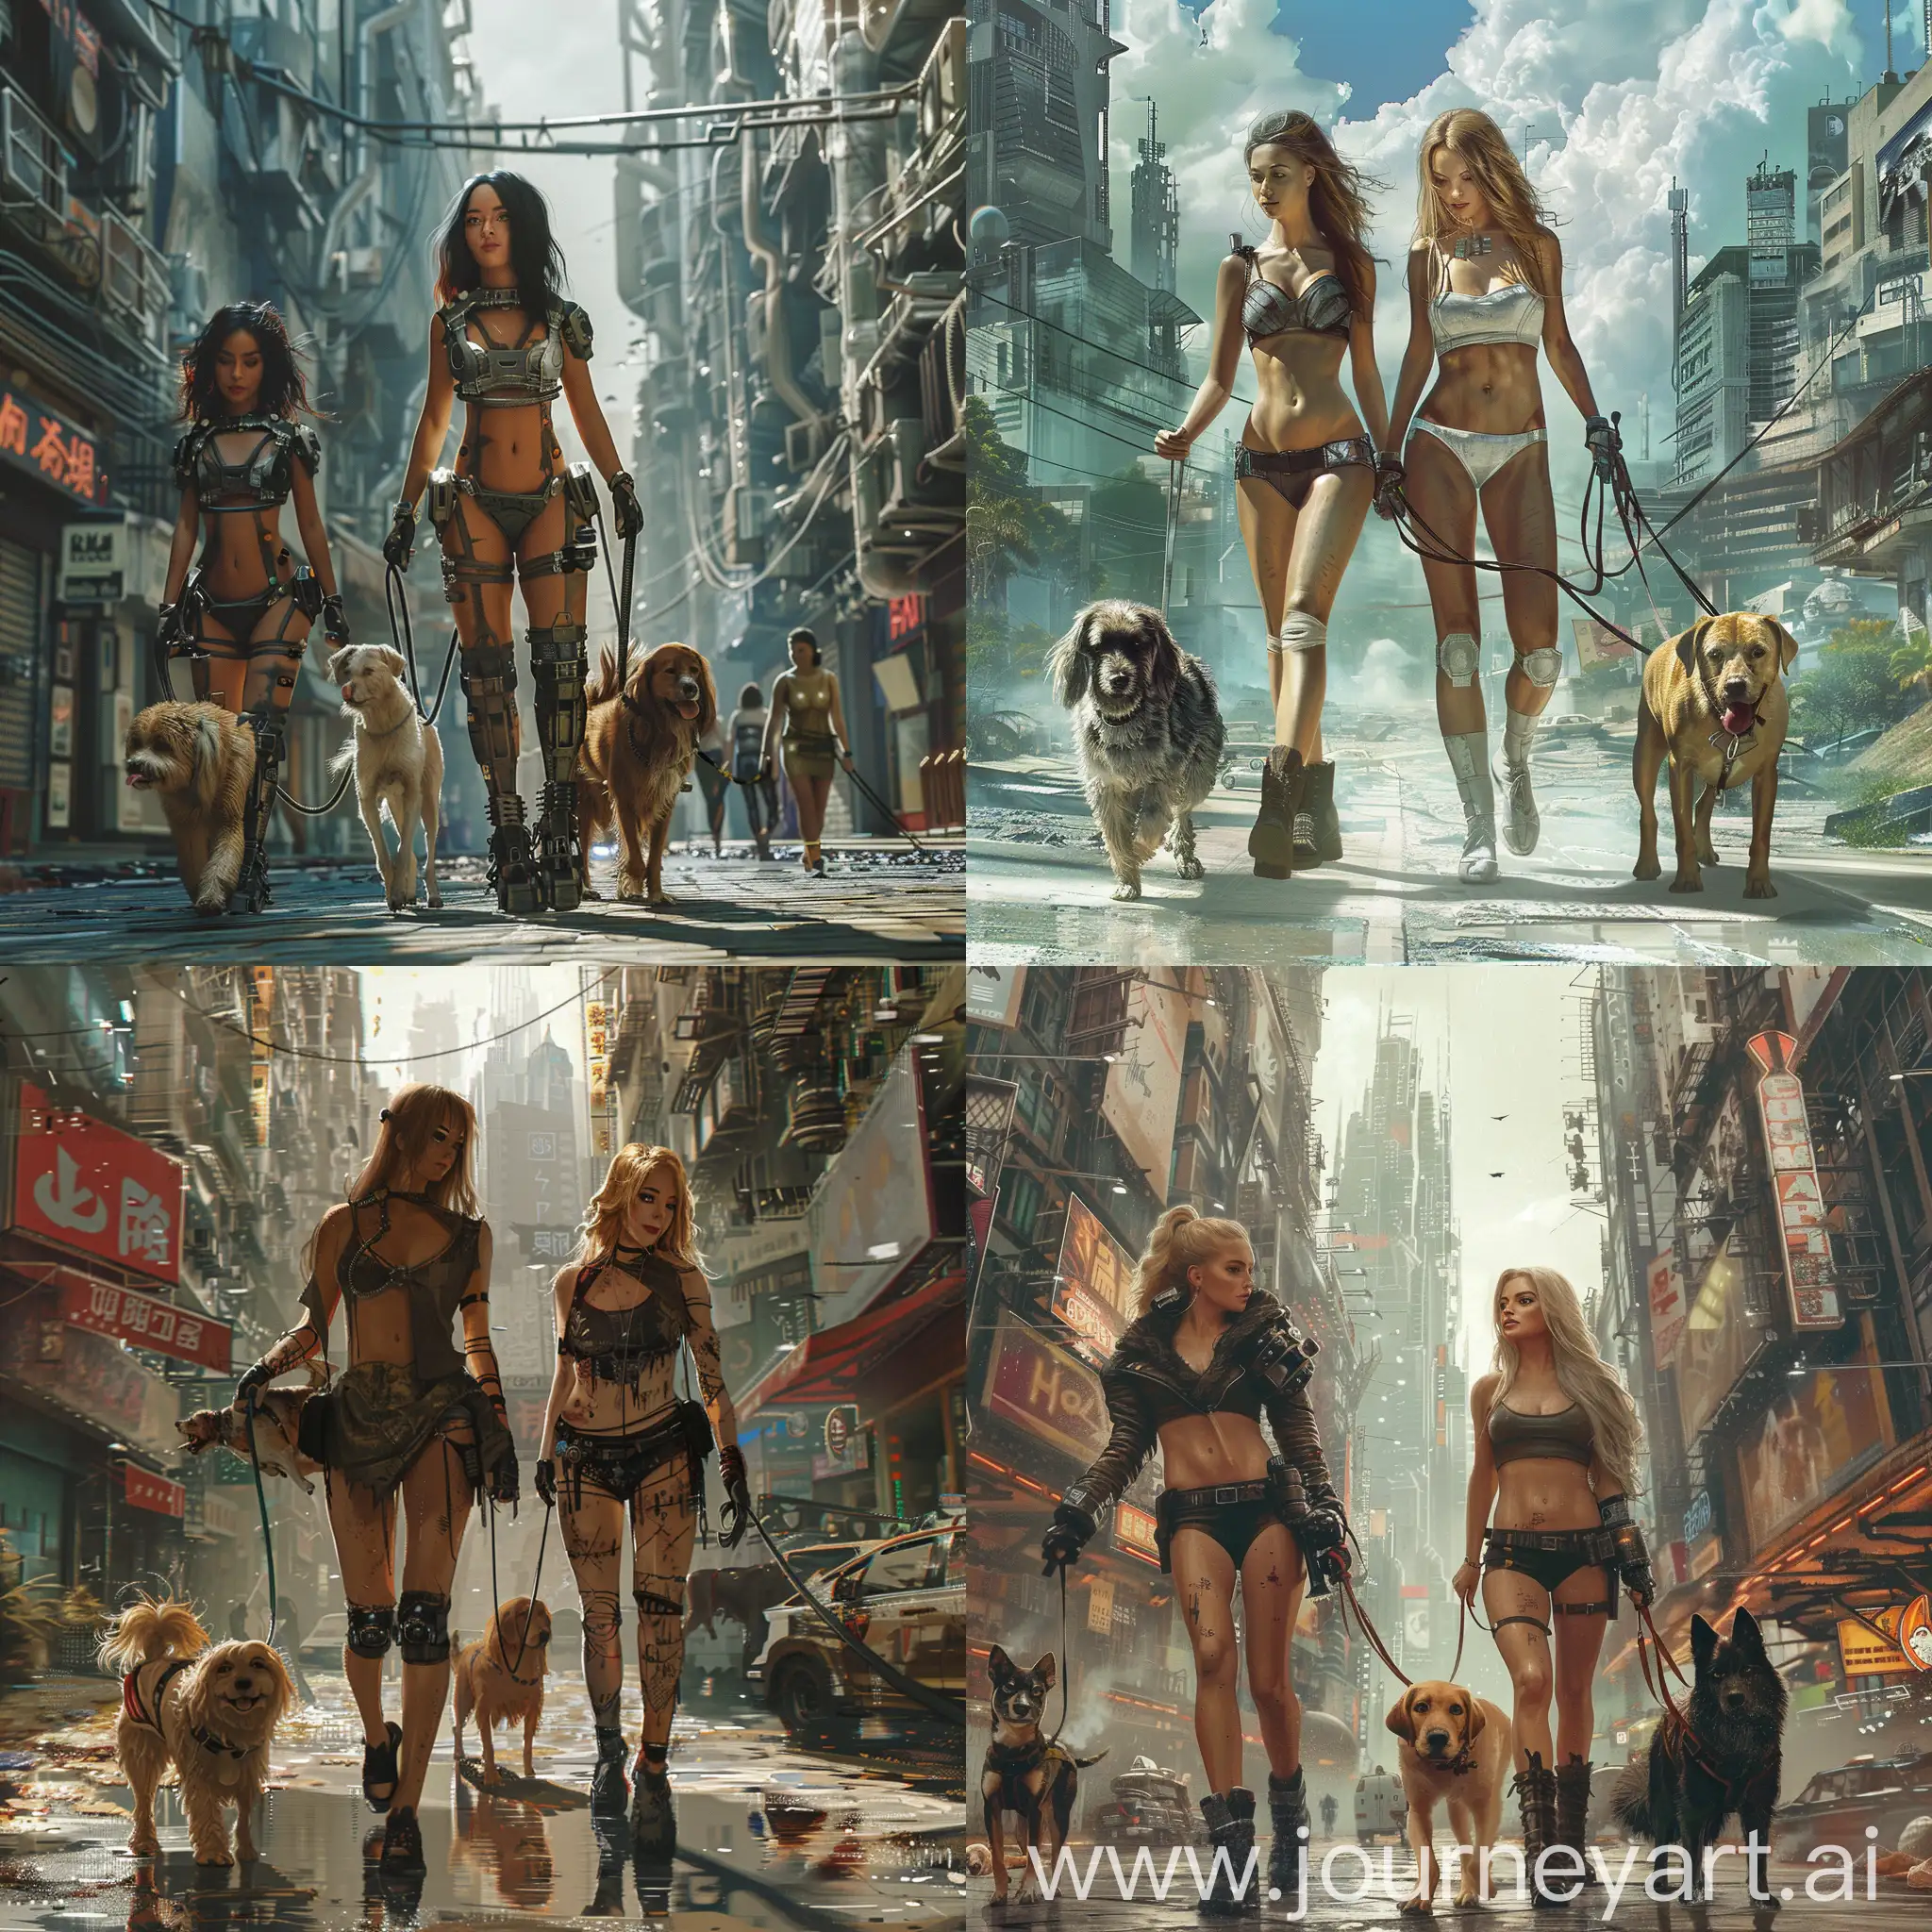 Stylish-Women-Strolling-with-Dogs-in-Futuristic-Urban-Landscape